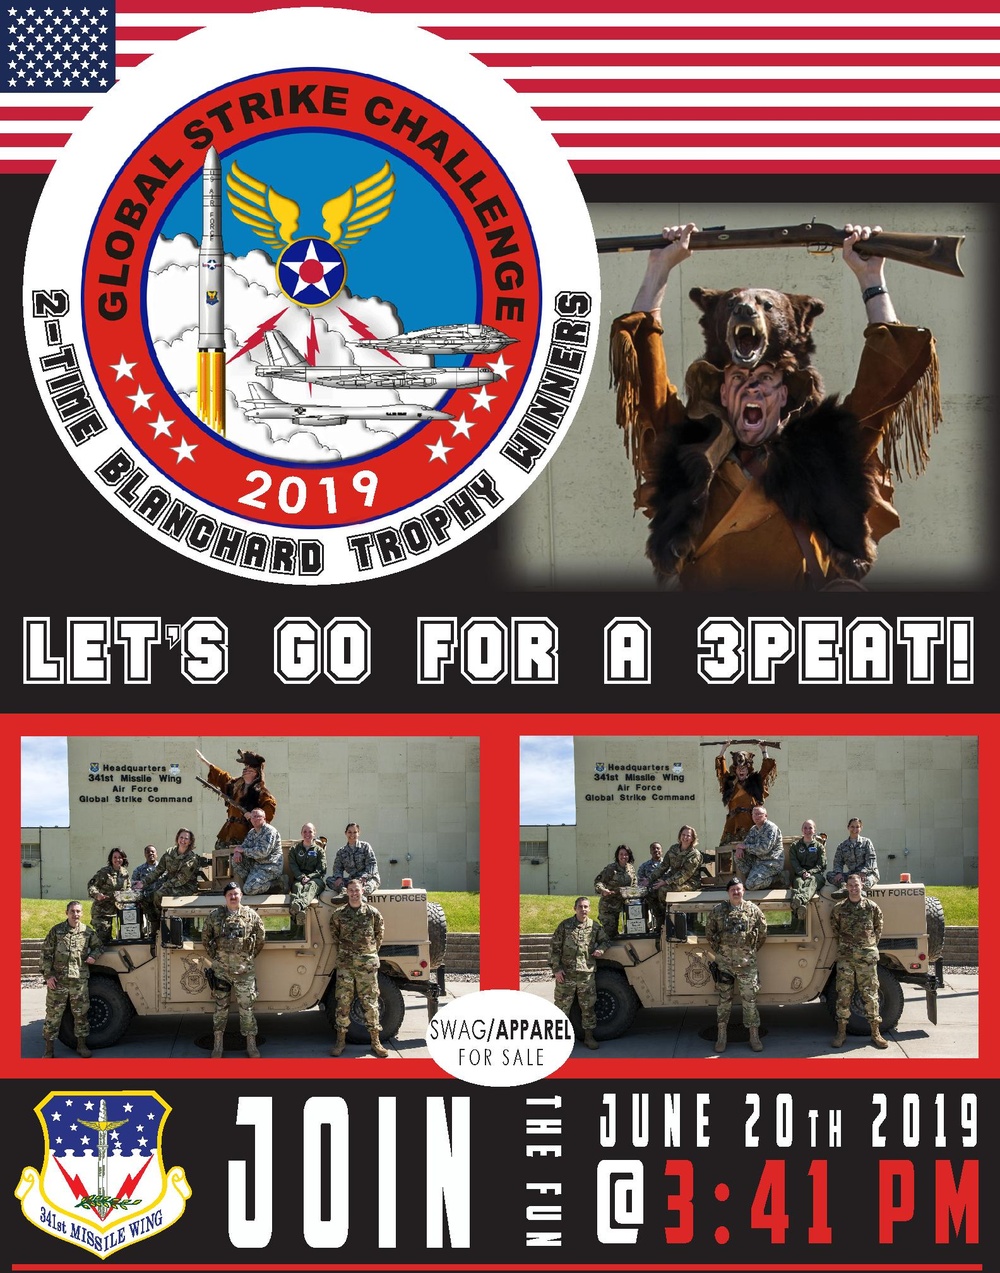 Malmstrom Air Force Base Global Strike Challenge Kickoff Poster 2019